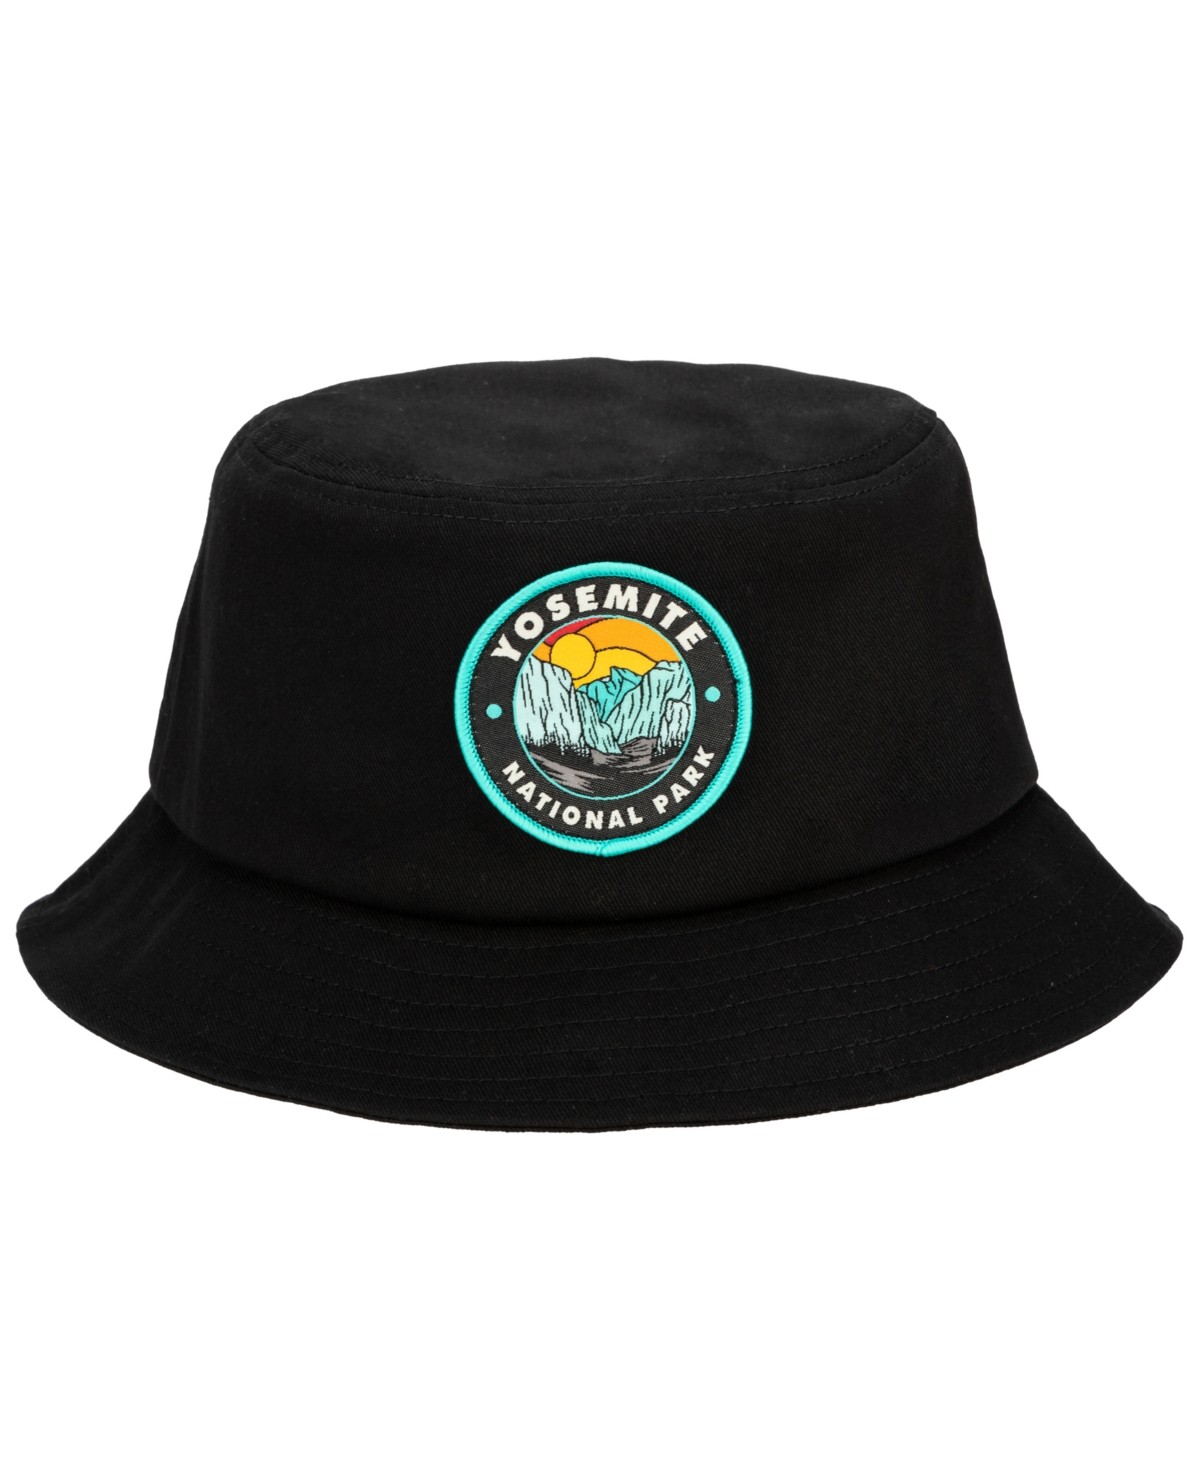 Men's Bucket Hat - Yosemite Black